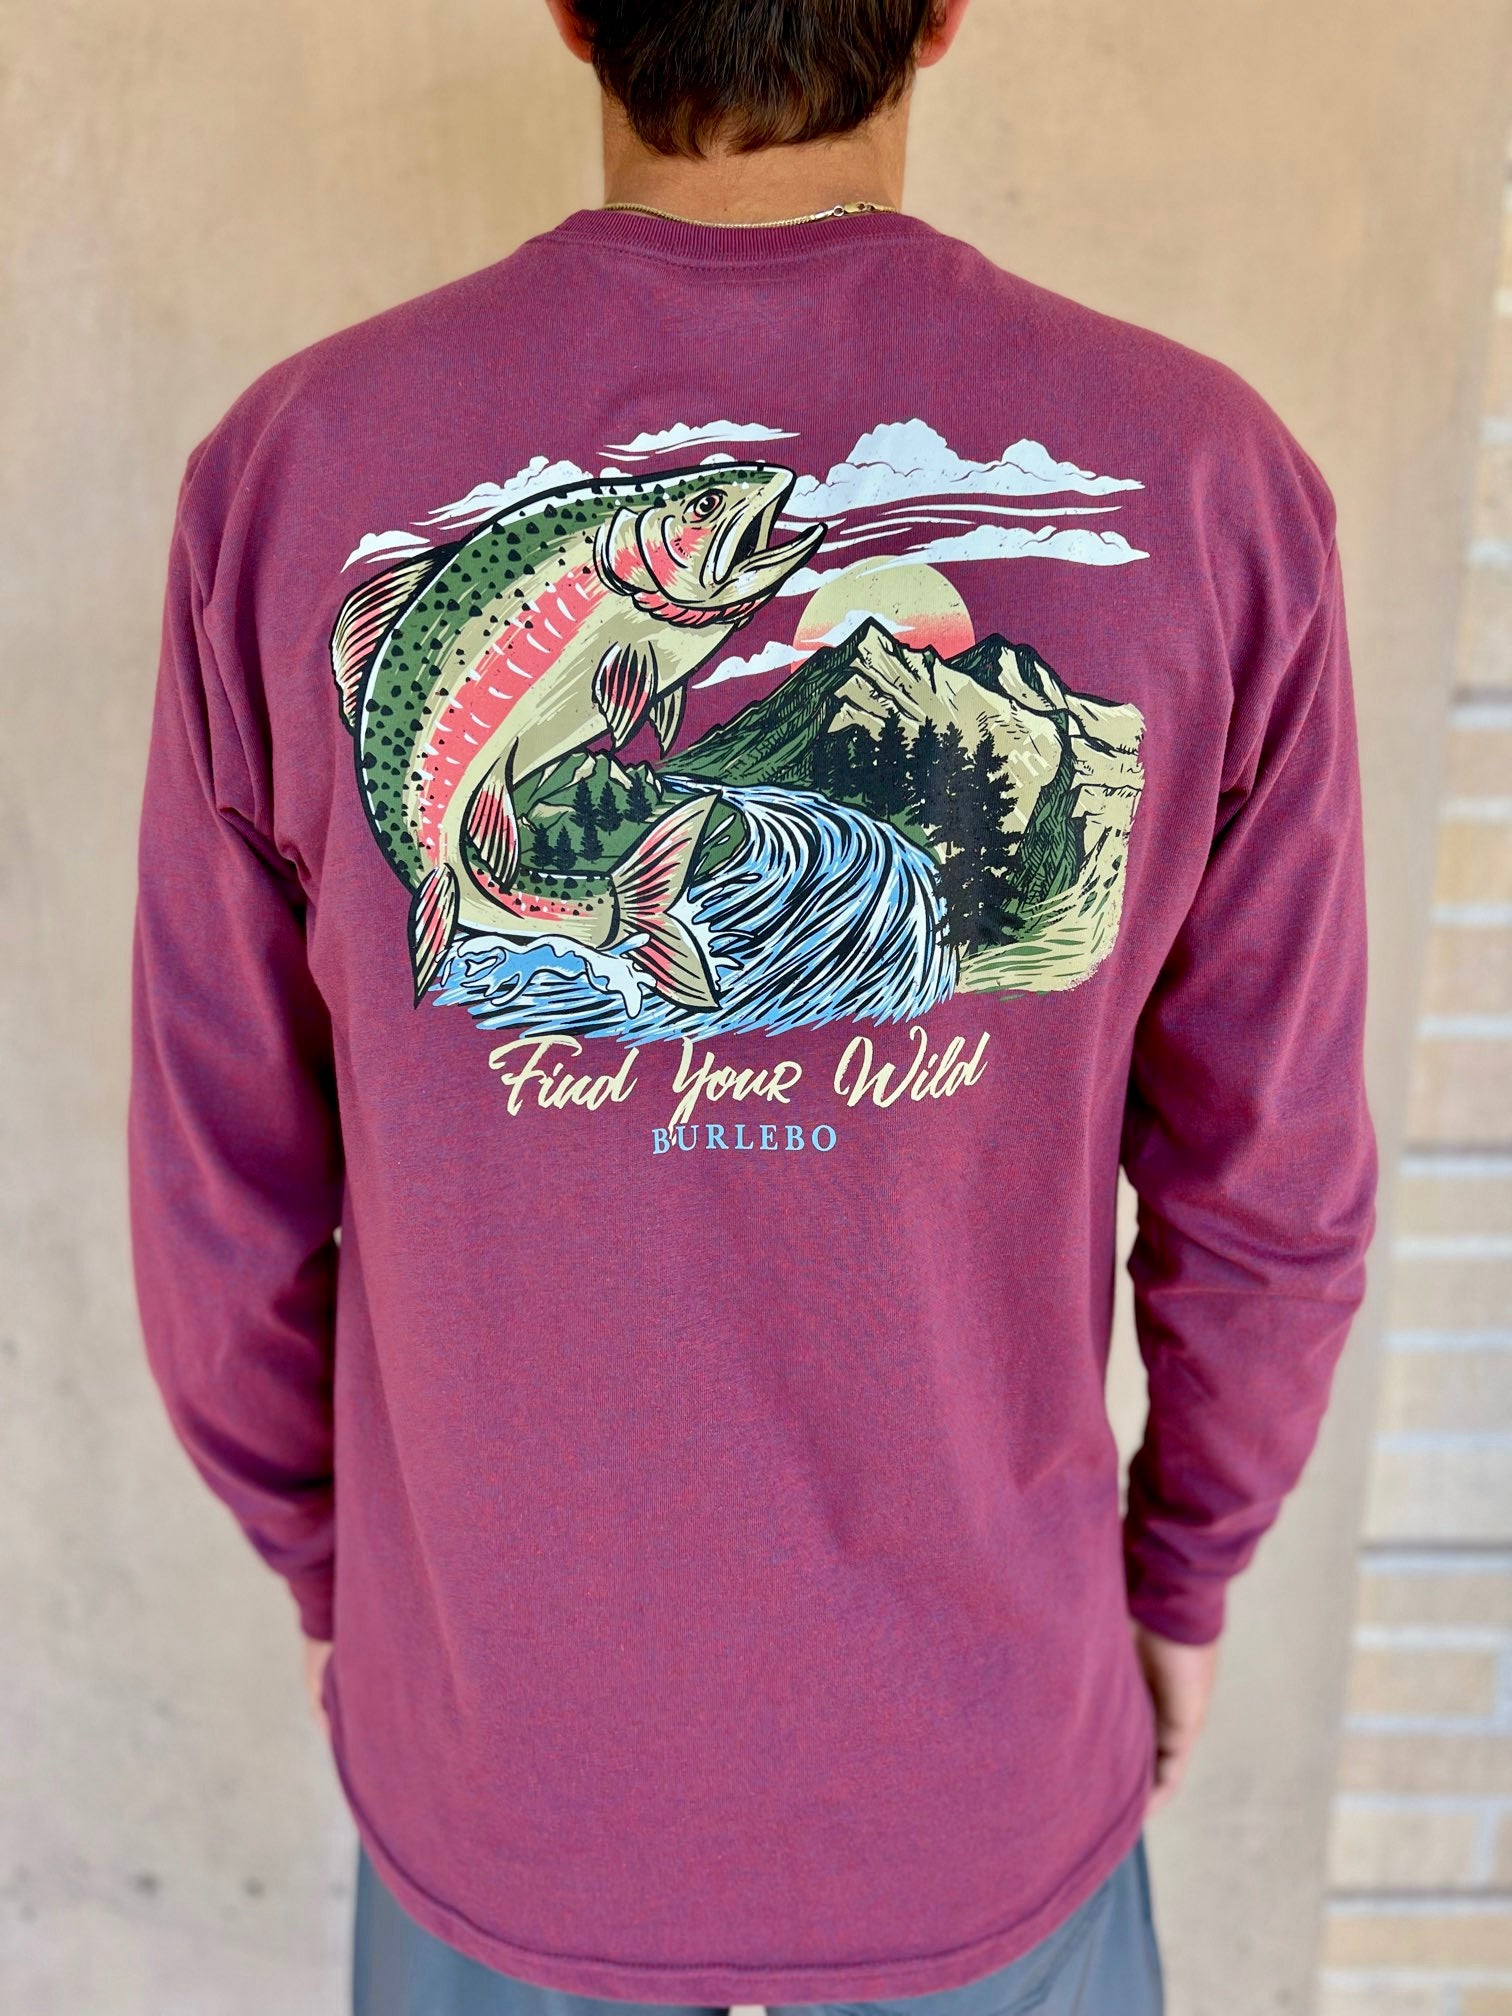 Burlebo’s Mountain Fish Long Sleeve T-shirt